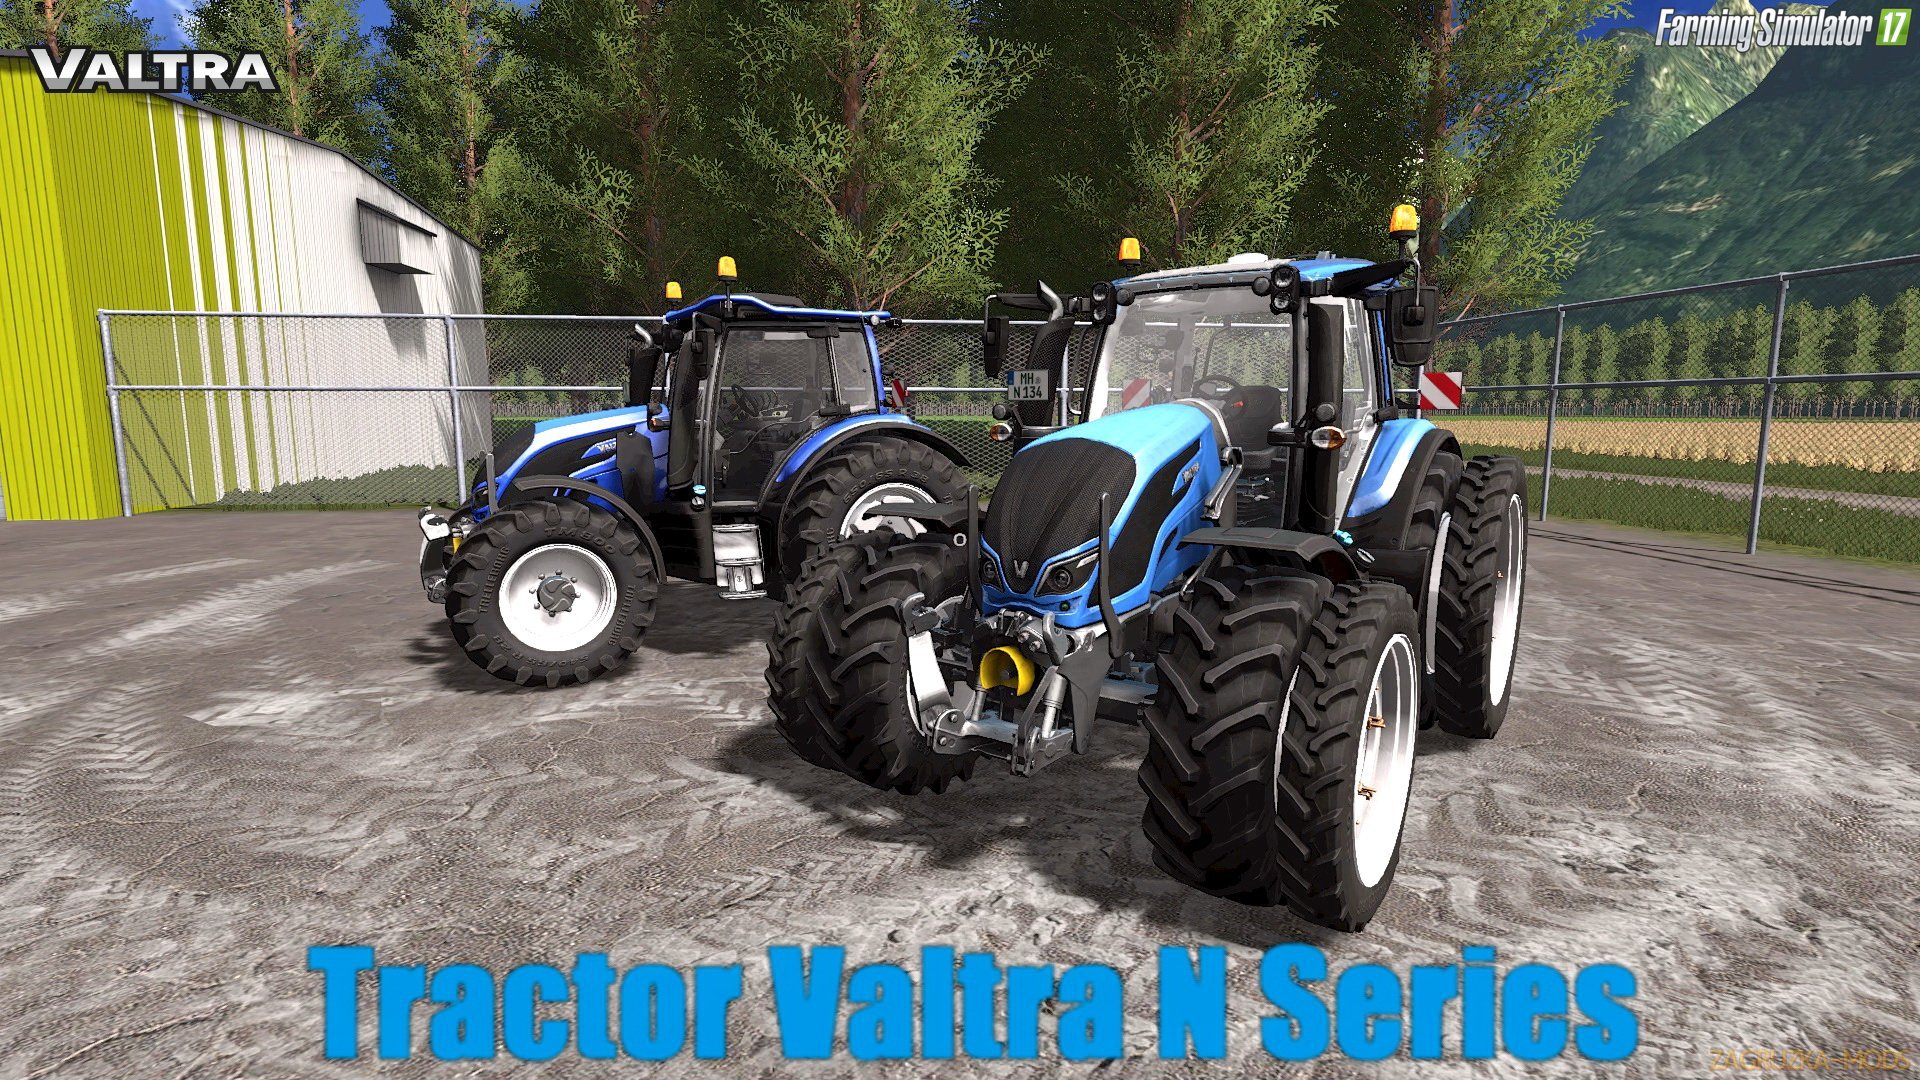 Valtra N Series v2.0 for FS 17